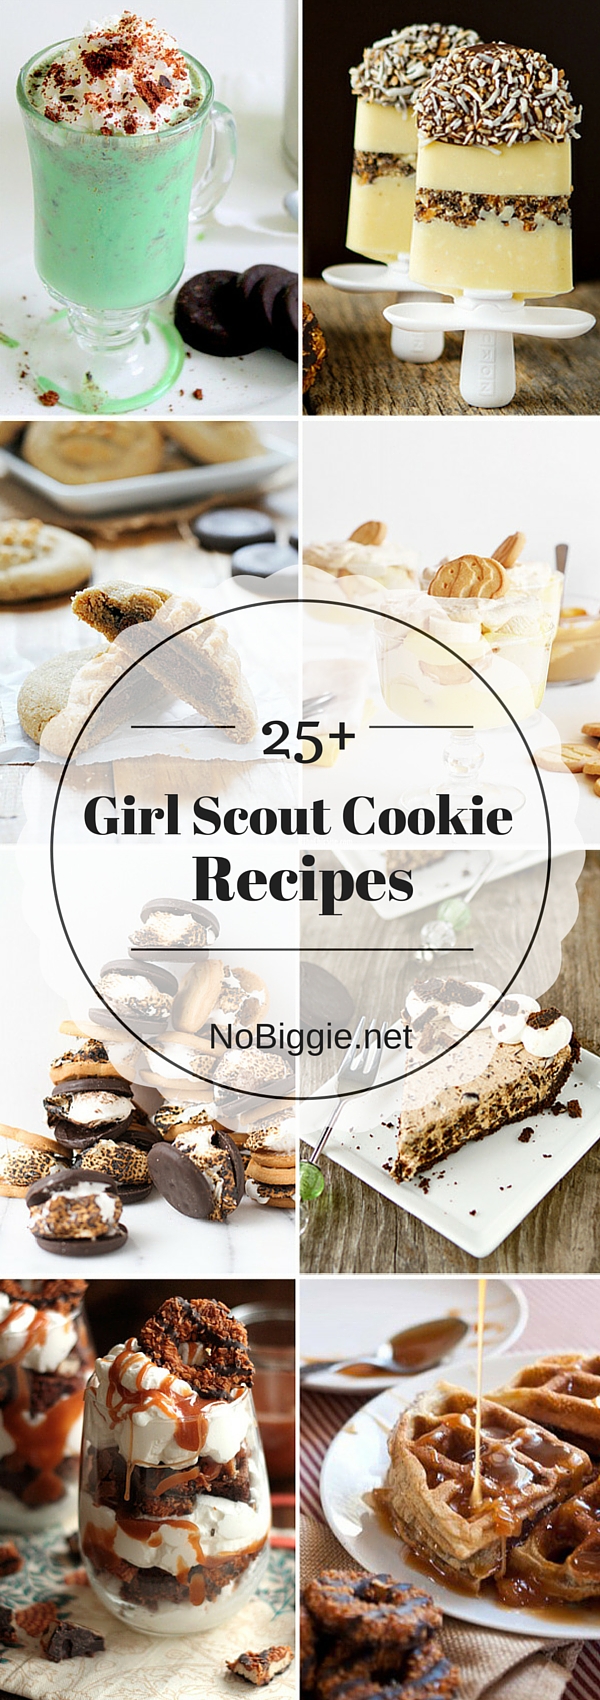 25+ Girl Scout Cookie Recipes | NoBiggie.net